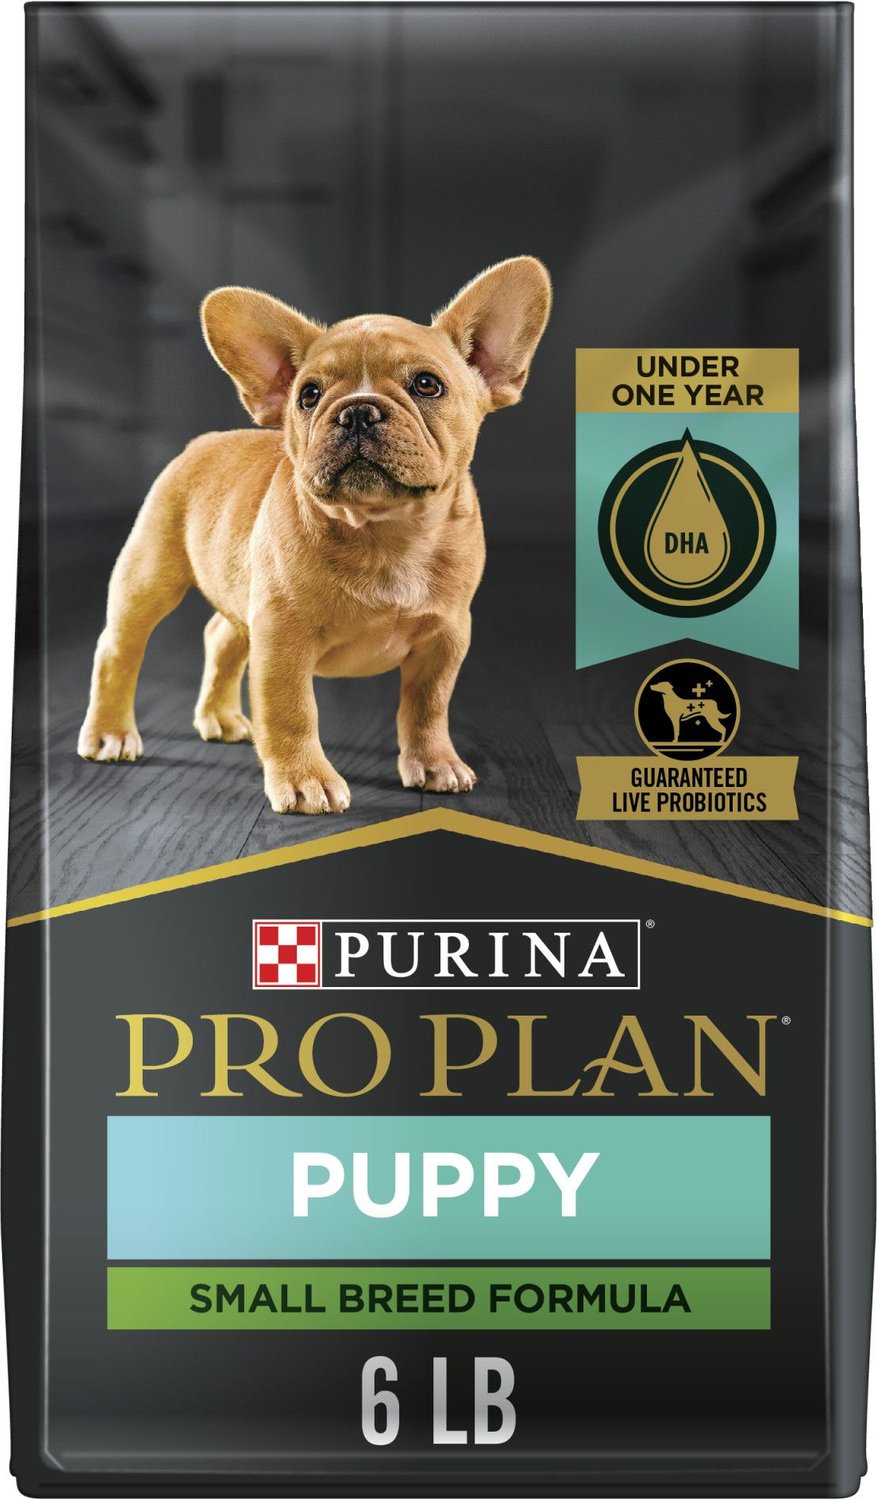 Purina Pro Plan Dog Food Feeding Chart